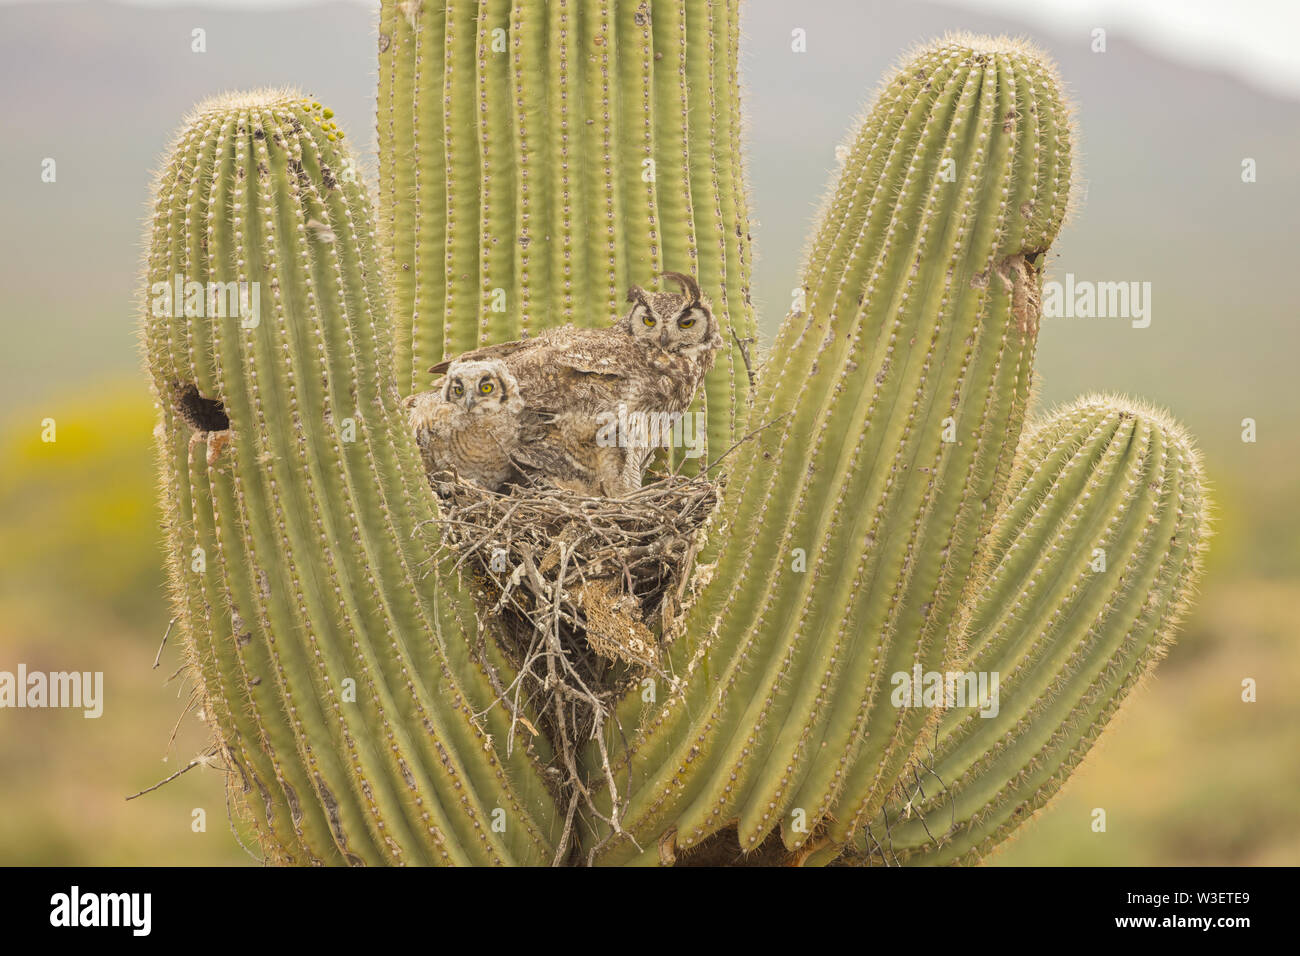 Grande cornuto gufi, Bubo virgininus, deserto Sonoran, in Arizona con nido di cactus Saguaro Foto Stock